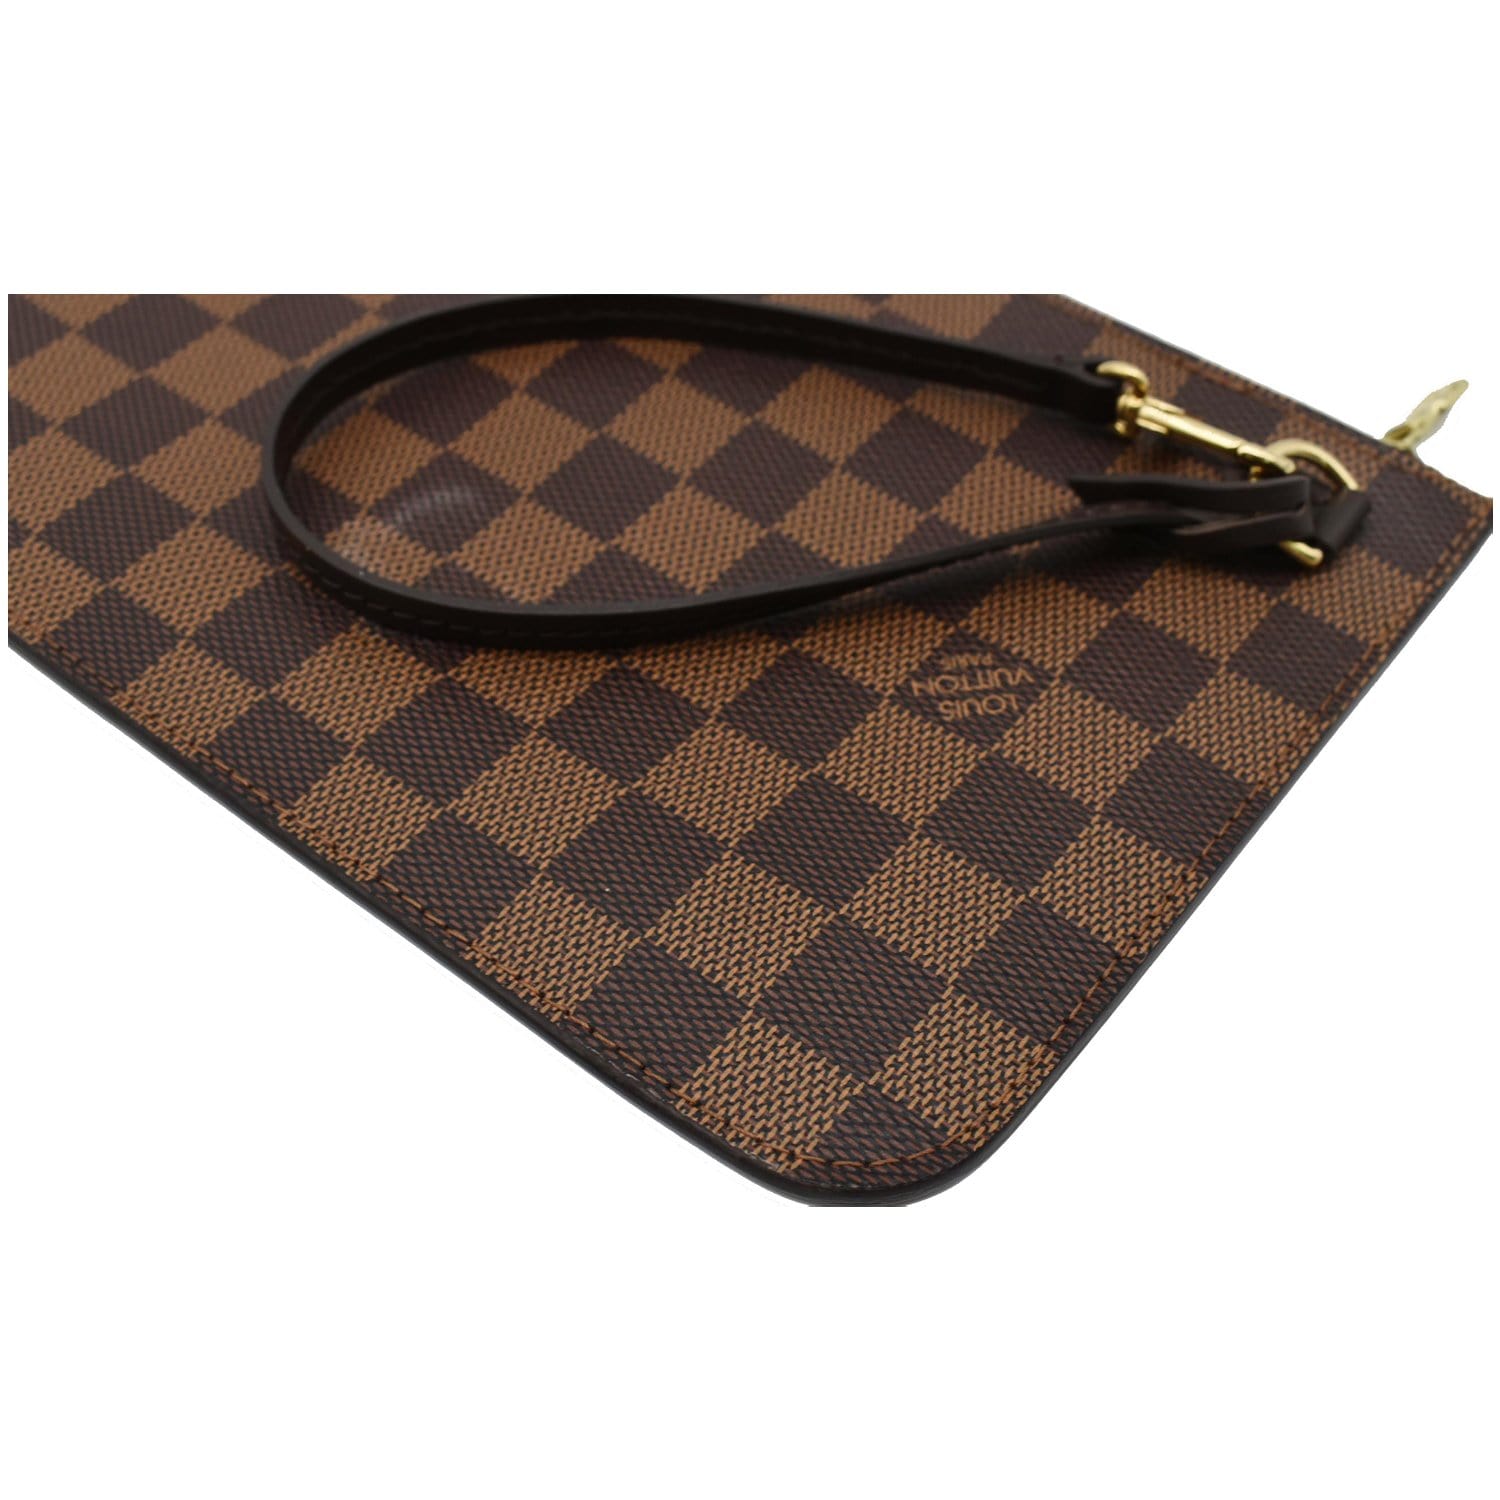 Louis Vuitton Pochette Neverfull Clutch Bag